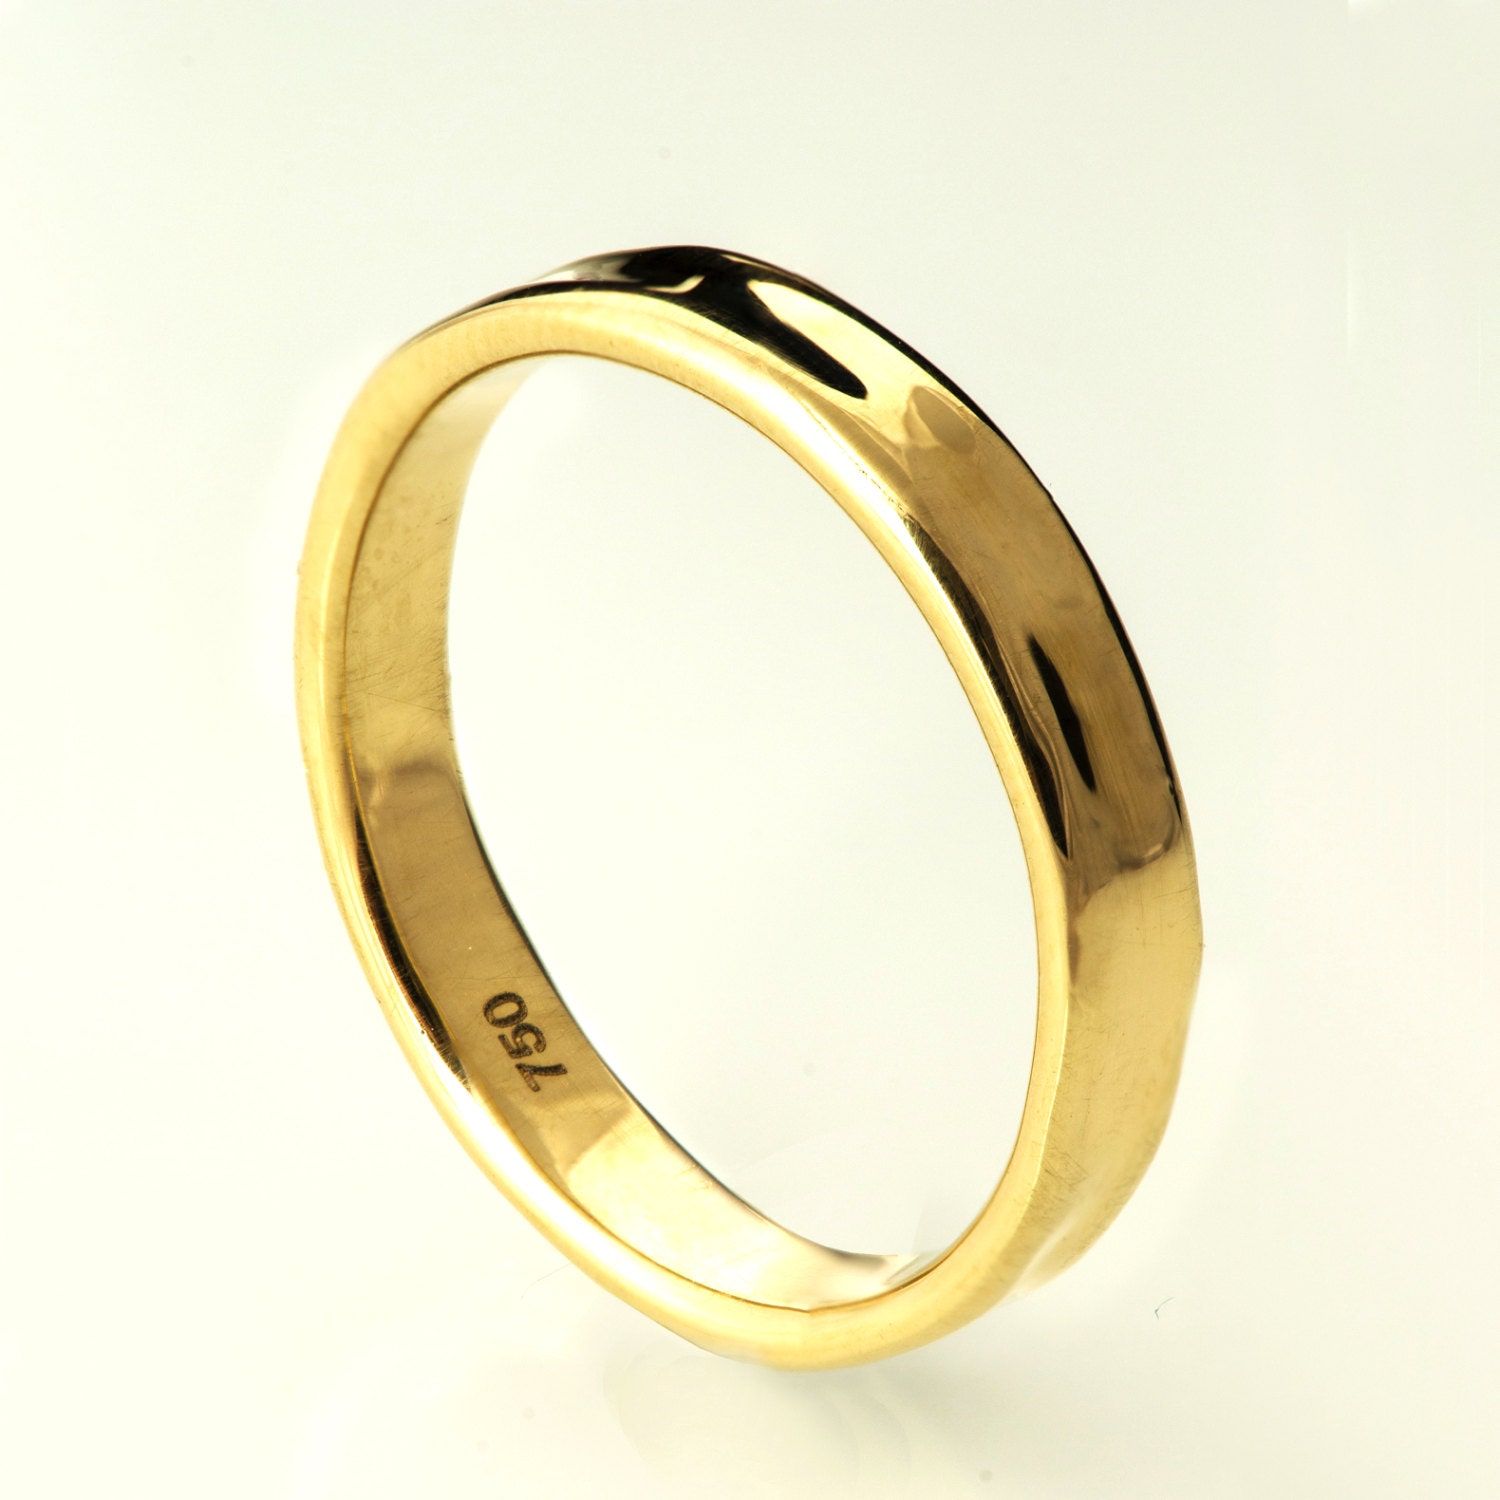 Symmetrically Carved Gold Finger Ring For Men